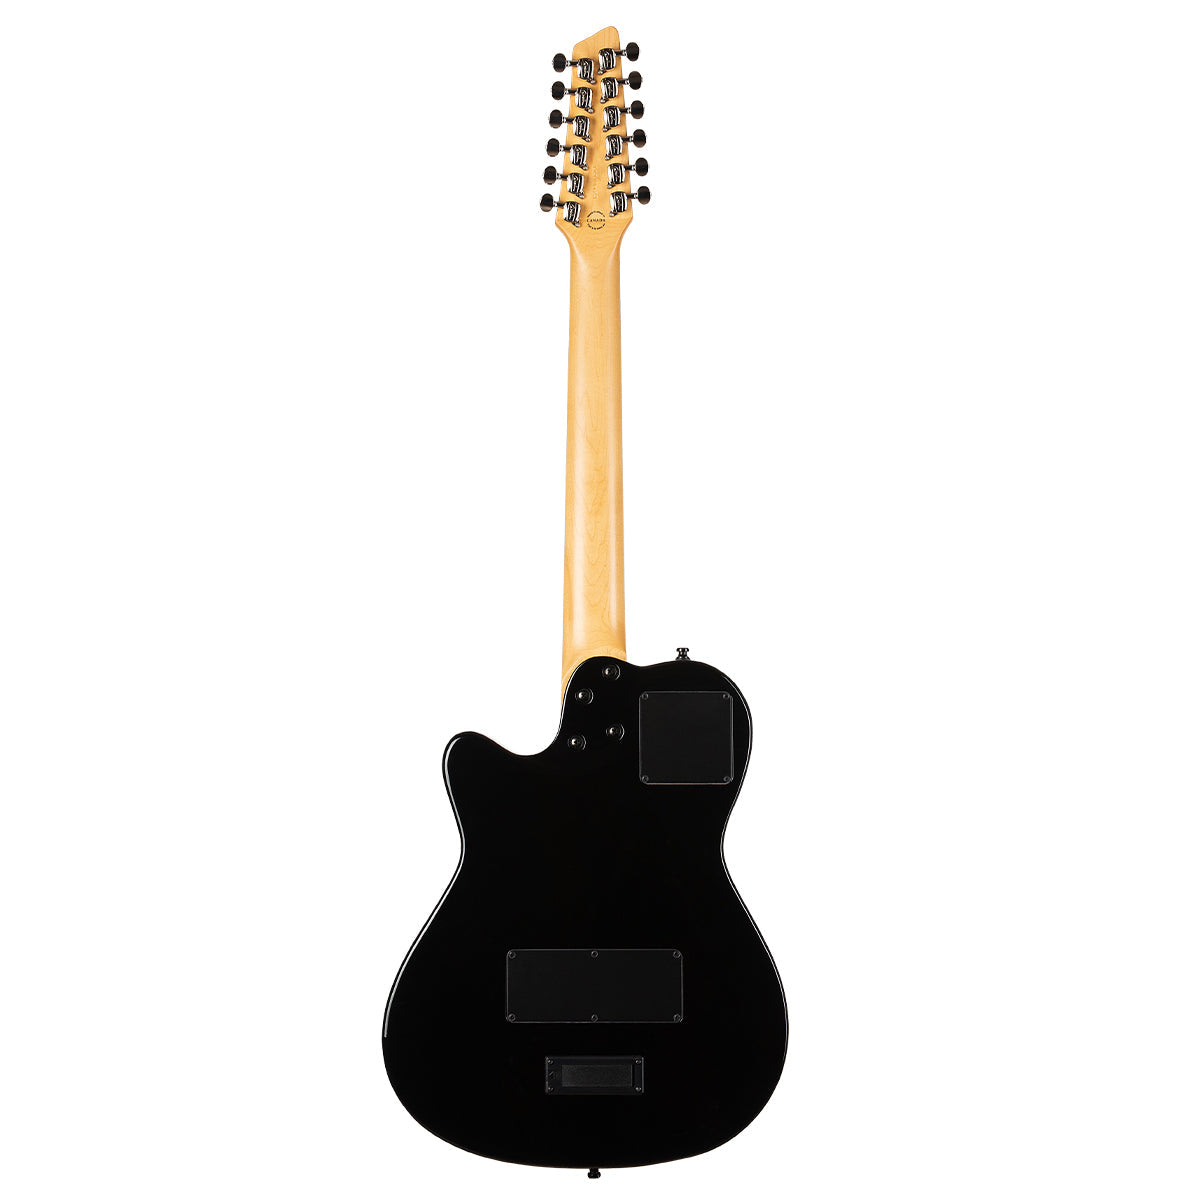 Godin A12 12 String Electric Guitar ~ Black HG, Electric Guitar for sale at Richards Guitars.